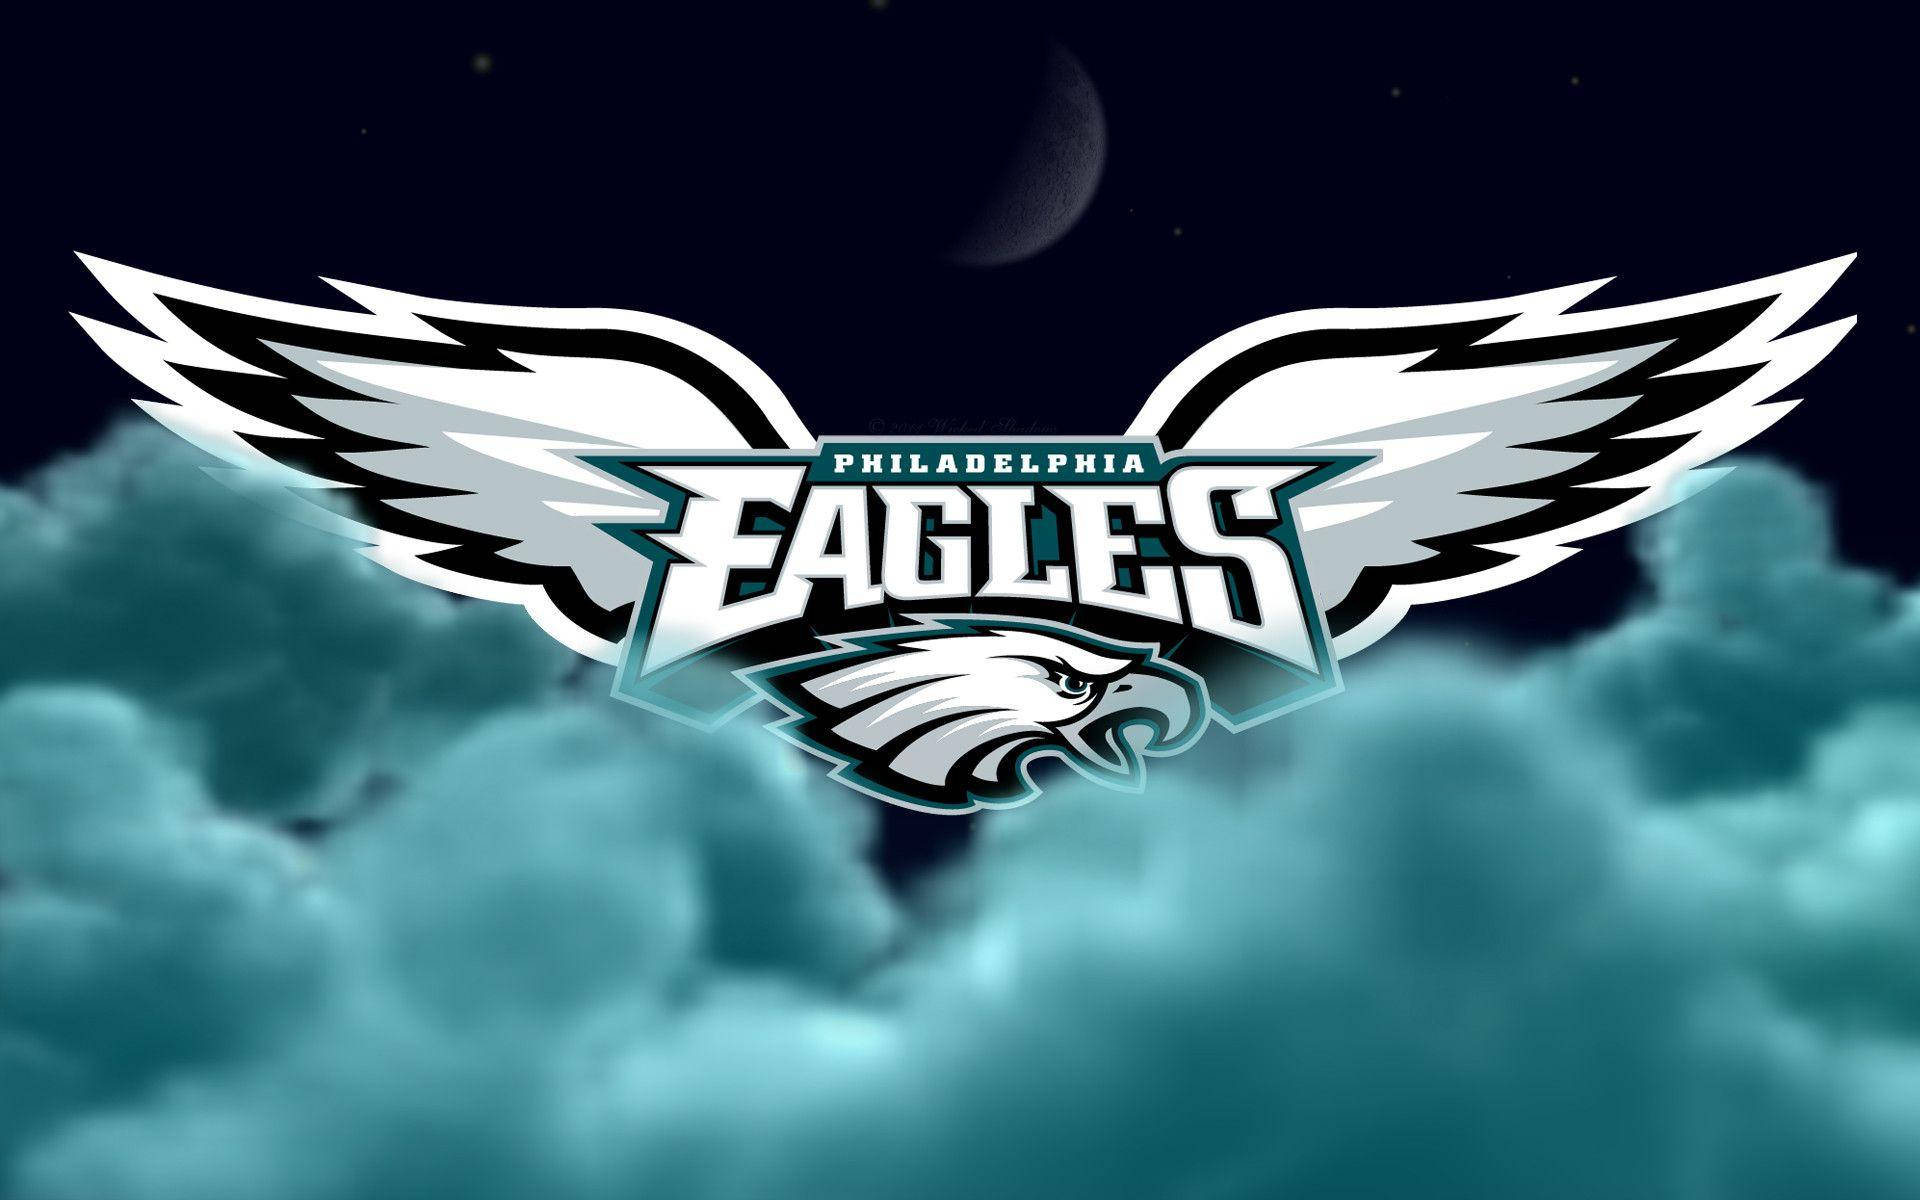 Philadelphia Eagles Logo With Wings Wallpaper